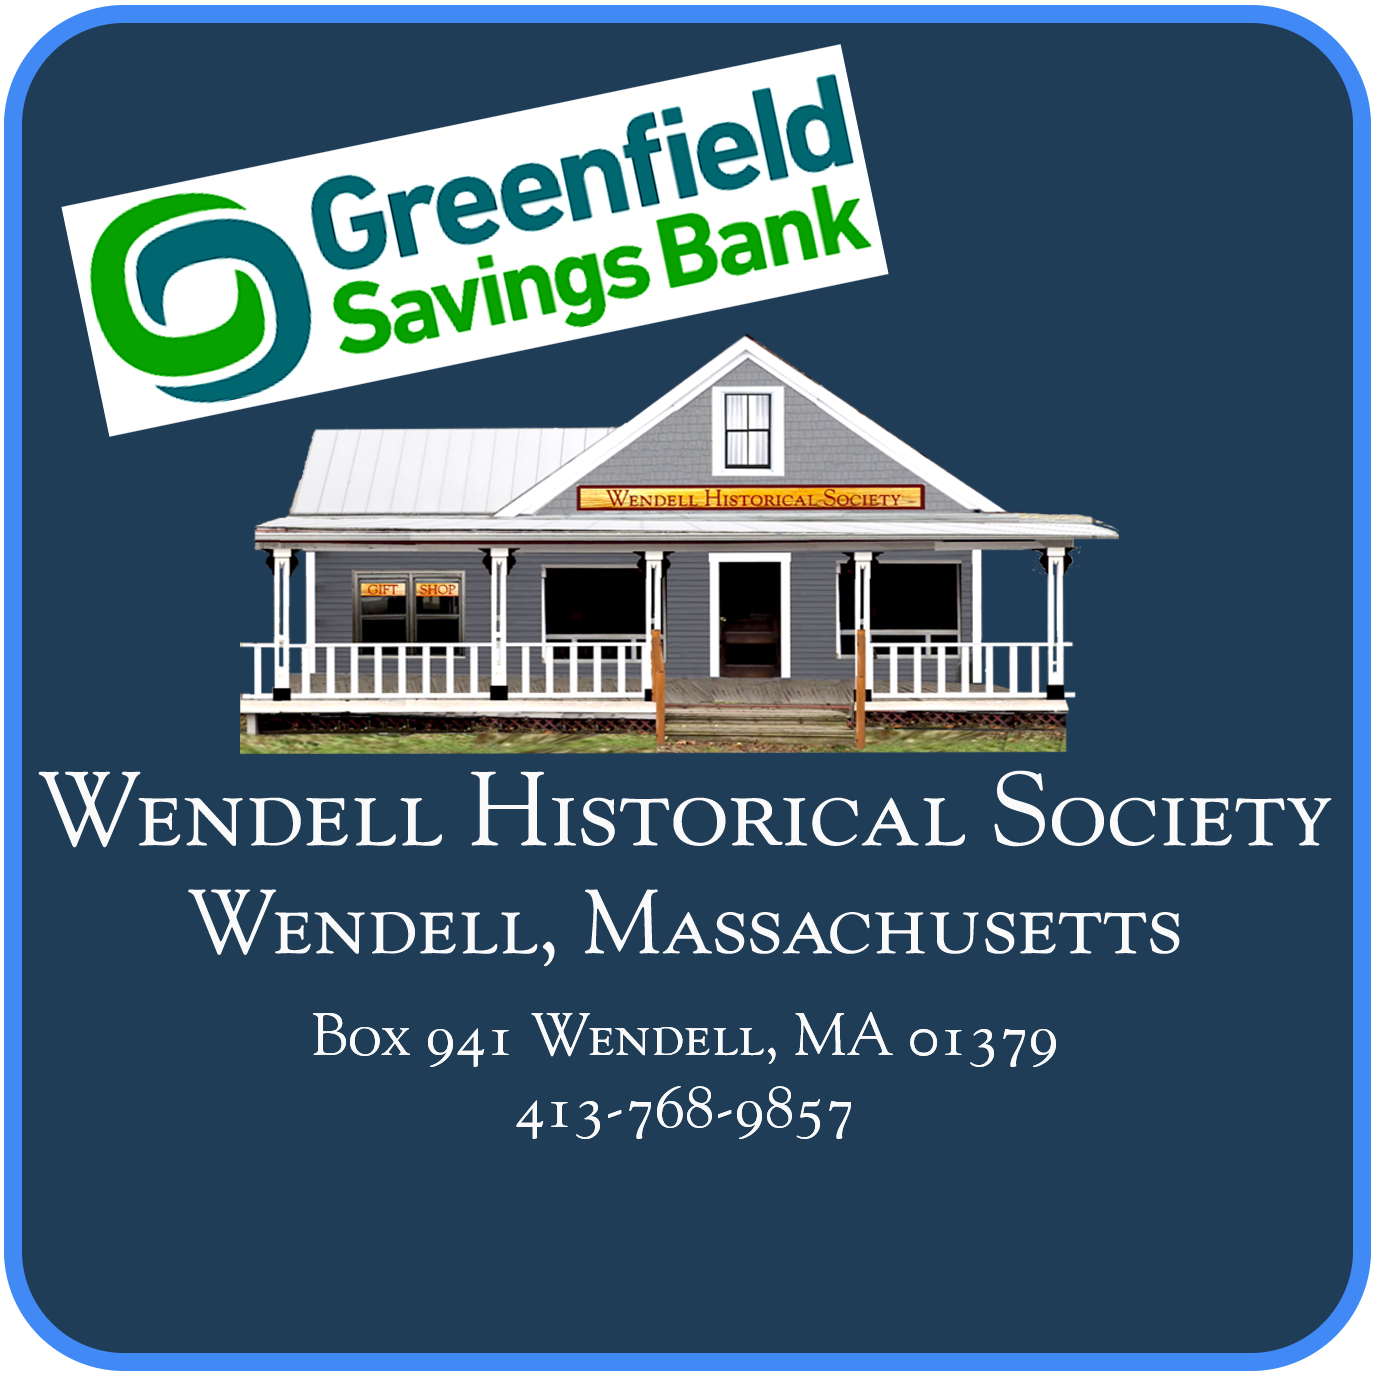 Thank you Greenfield Savings Bank